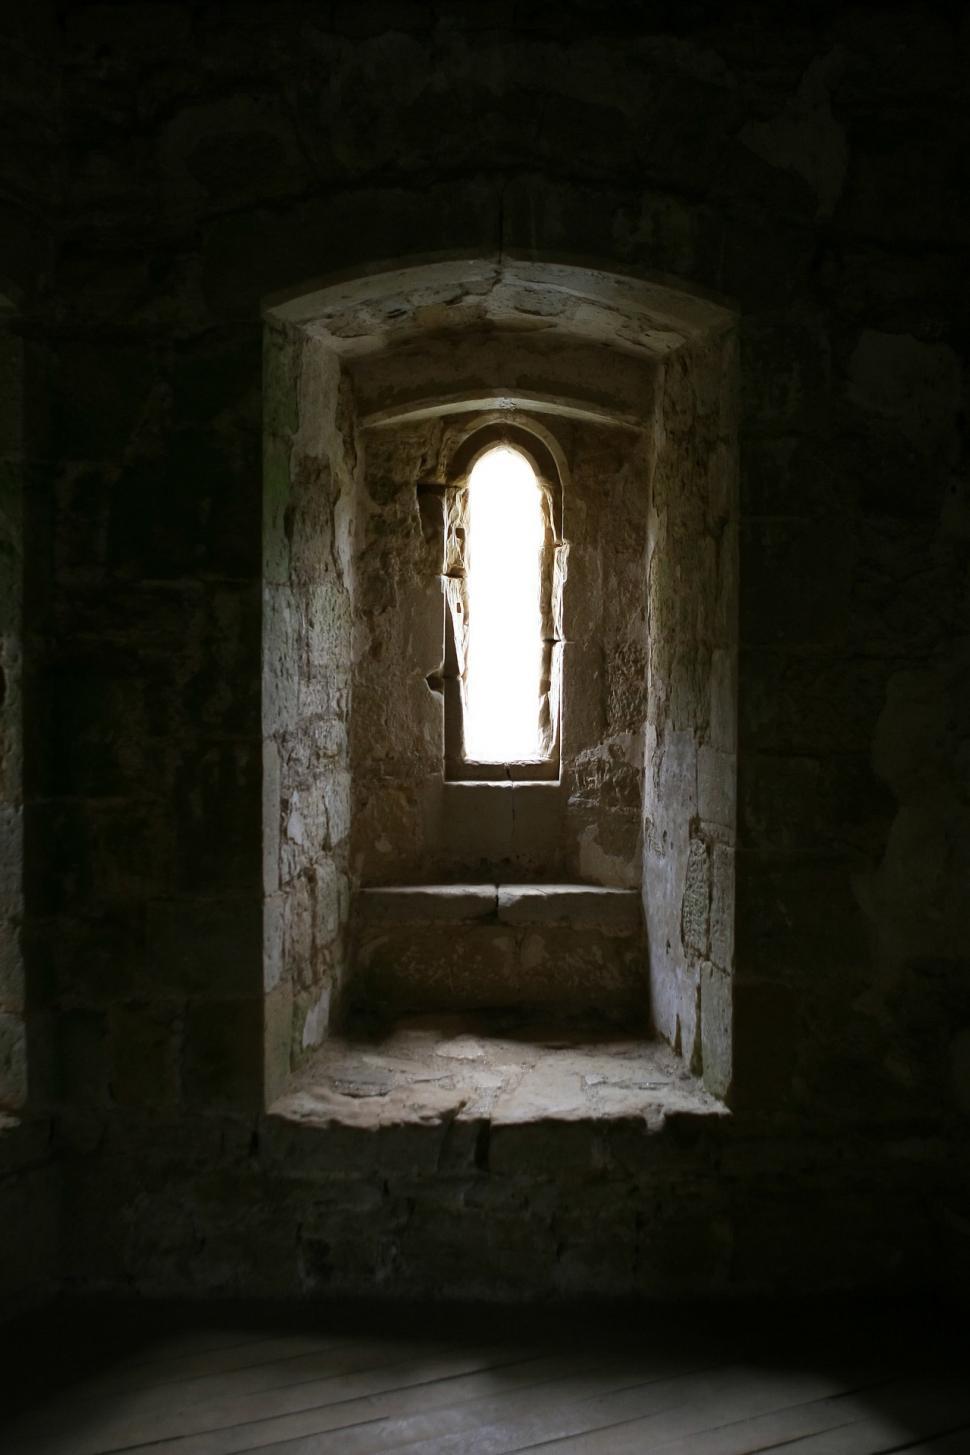 Free Image of Dark Room With Window and Wooden Floor 